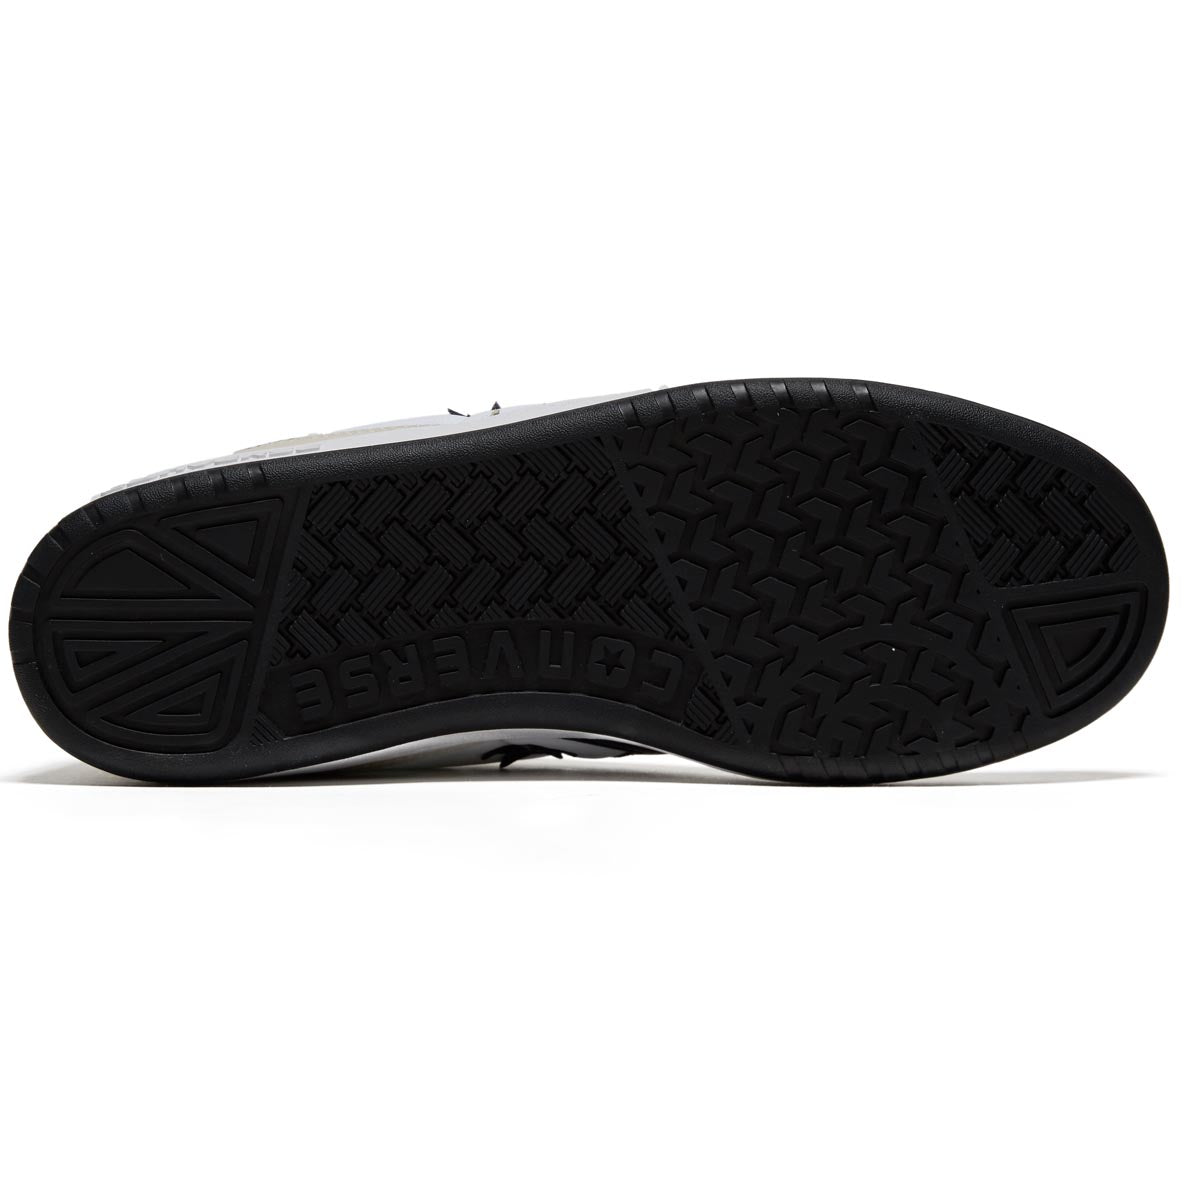 Converse Fastbreak Pro Mid Shoes - White/Black/Egret image 4